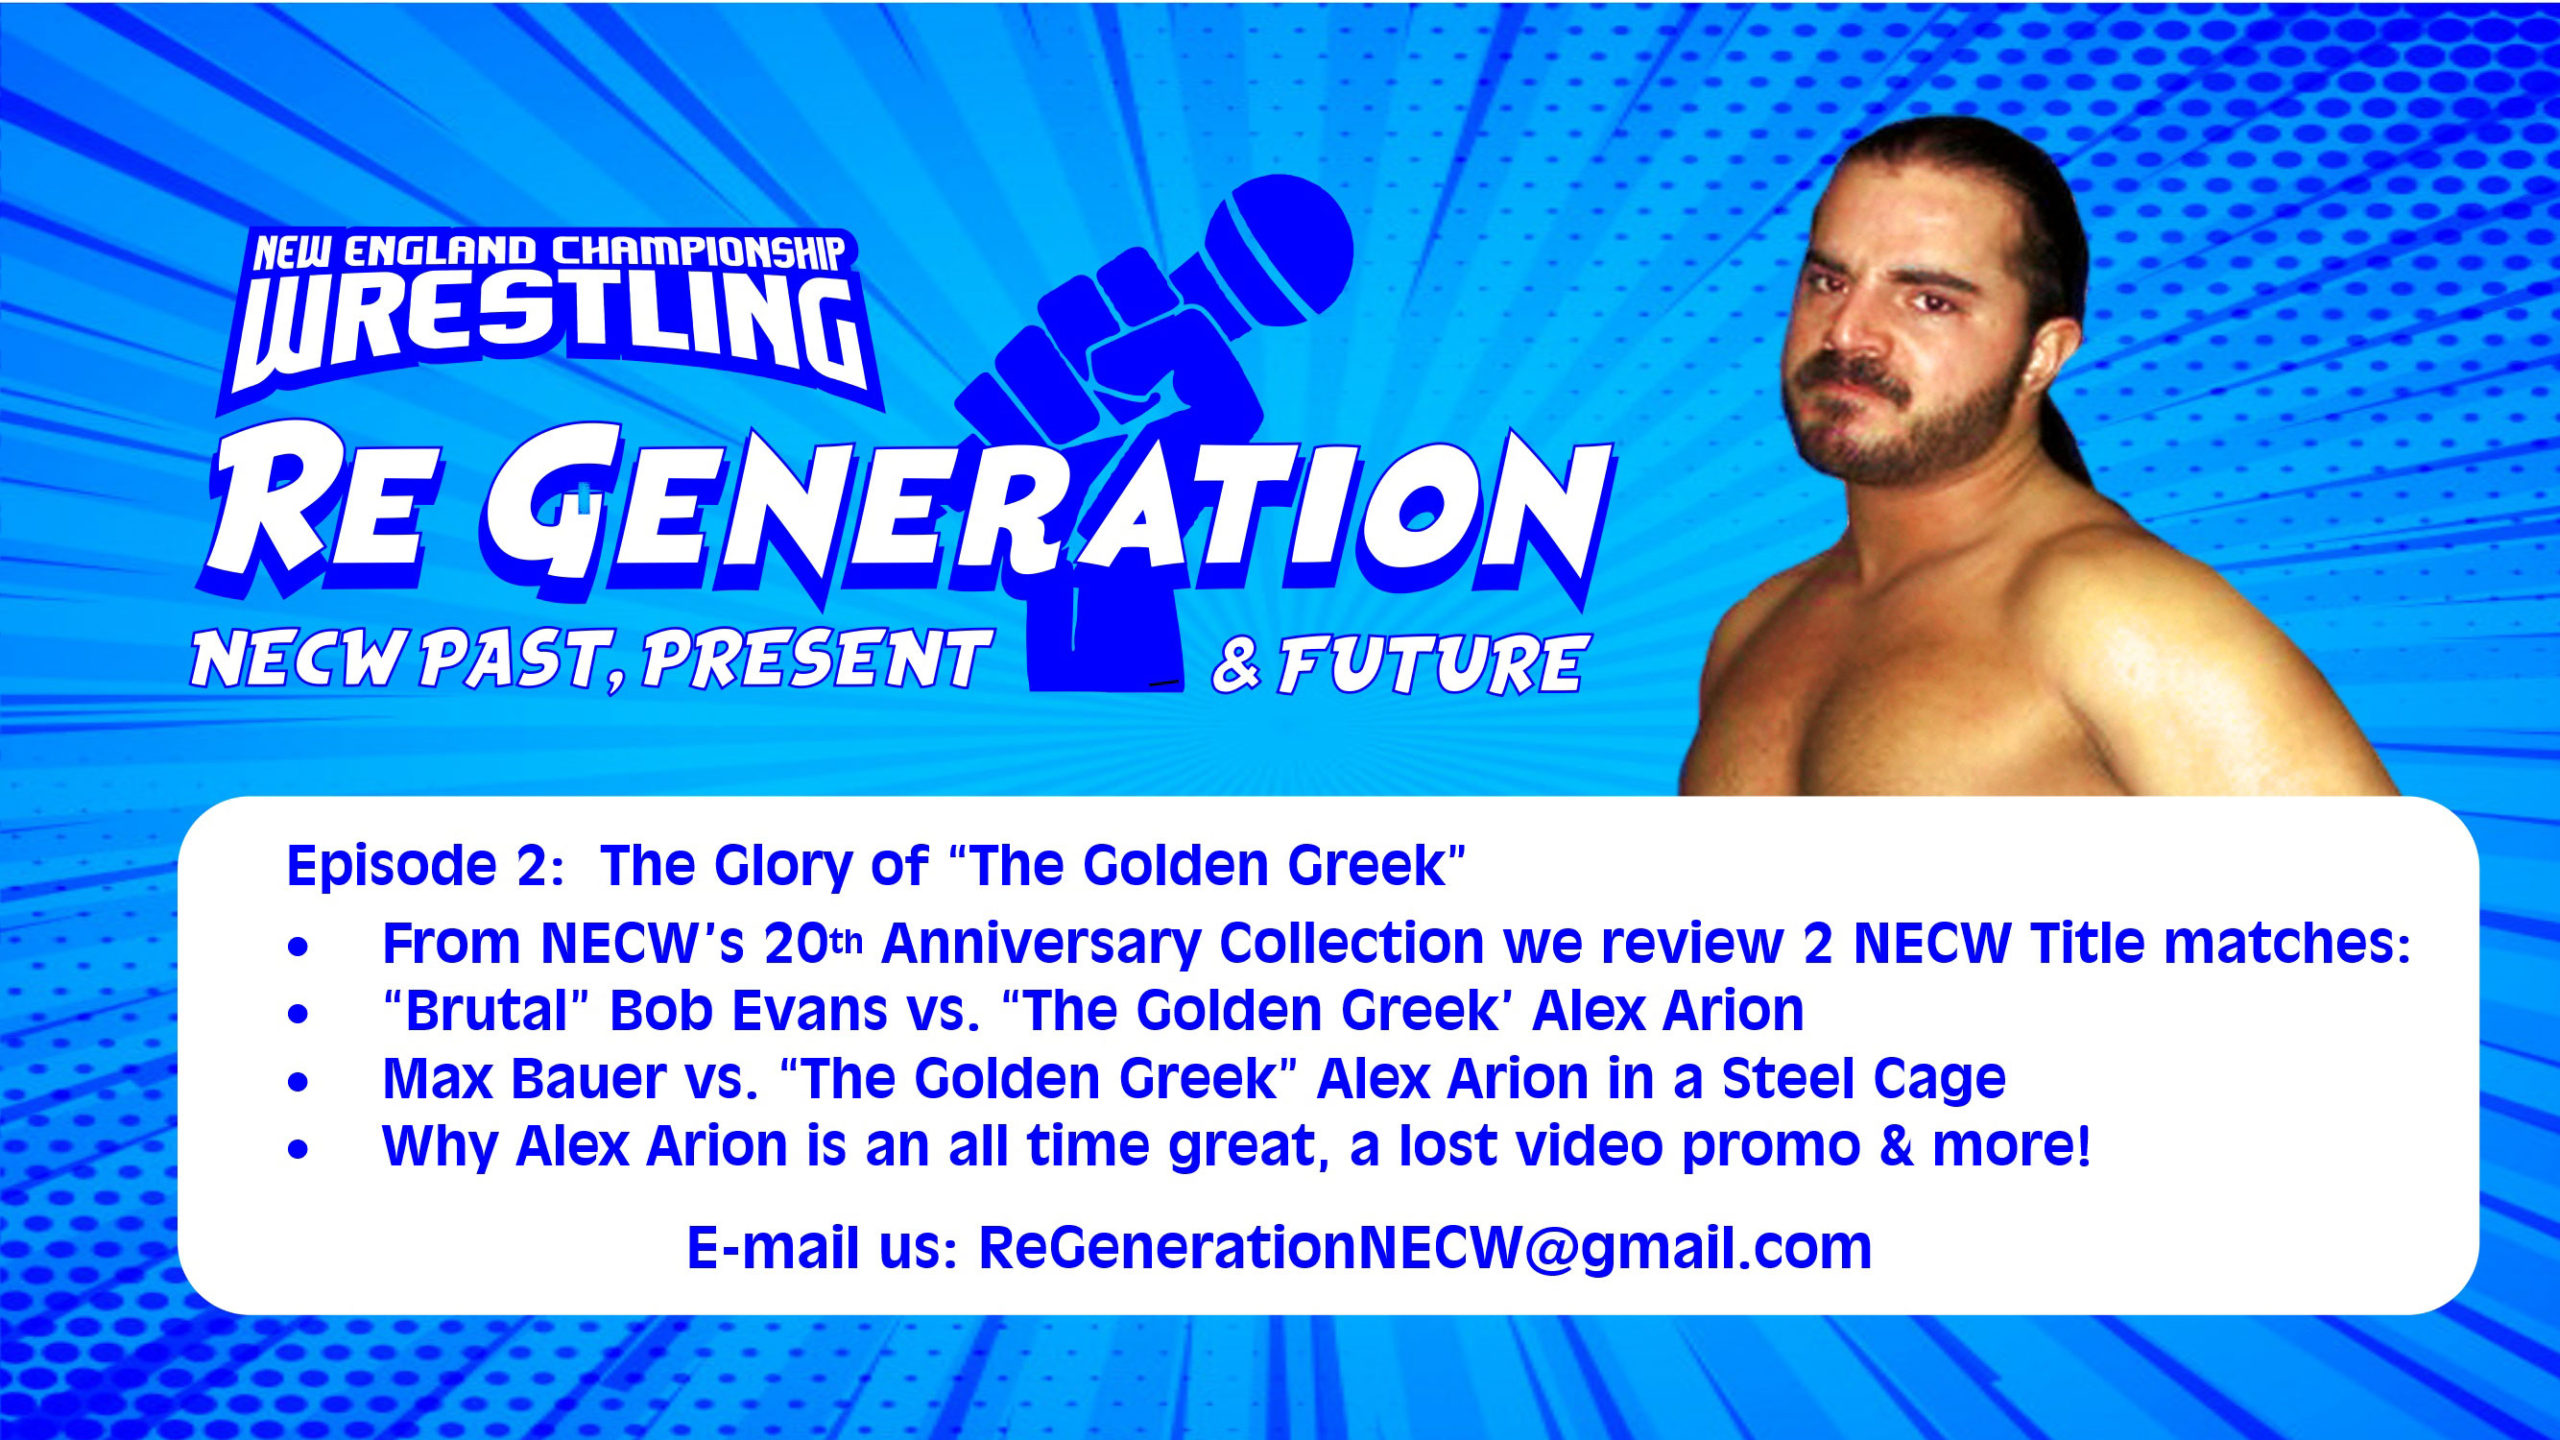 NECW's ReGeneration Podcast - Episode 2, Looks Back at "The Golden Greek" Alex Arion